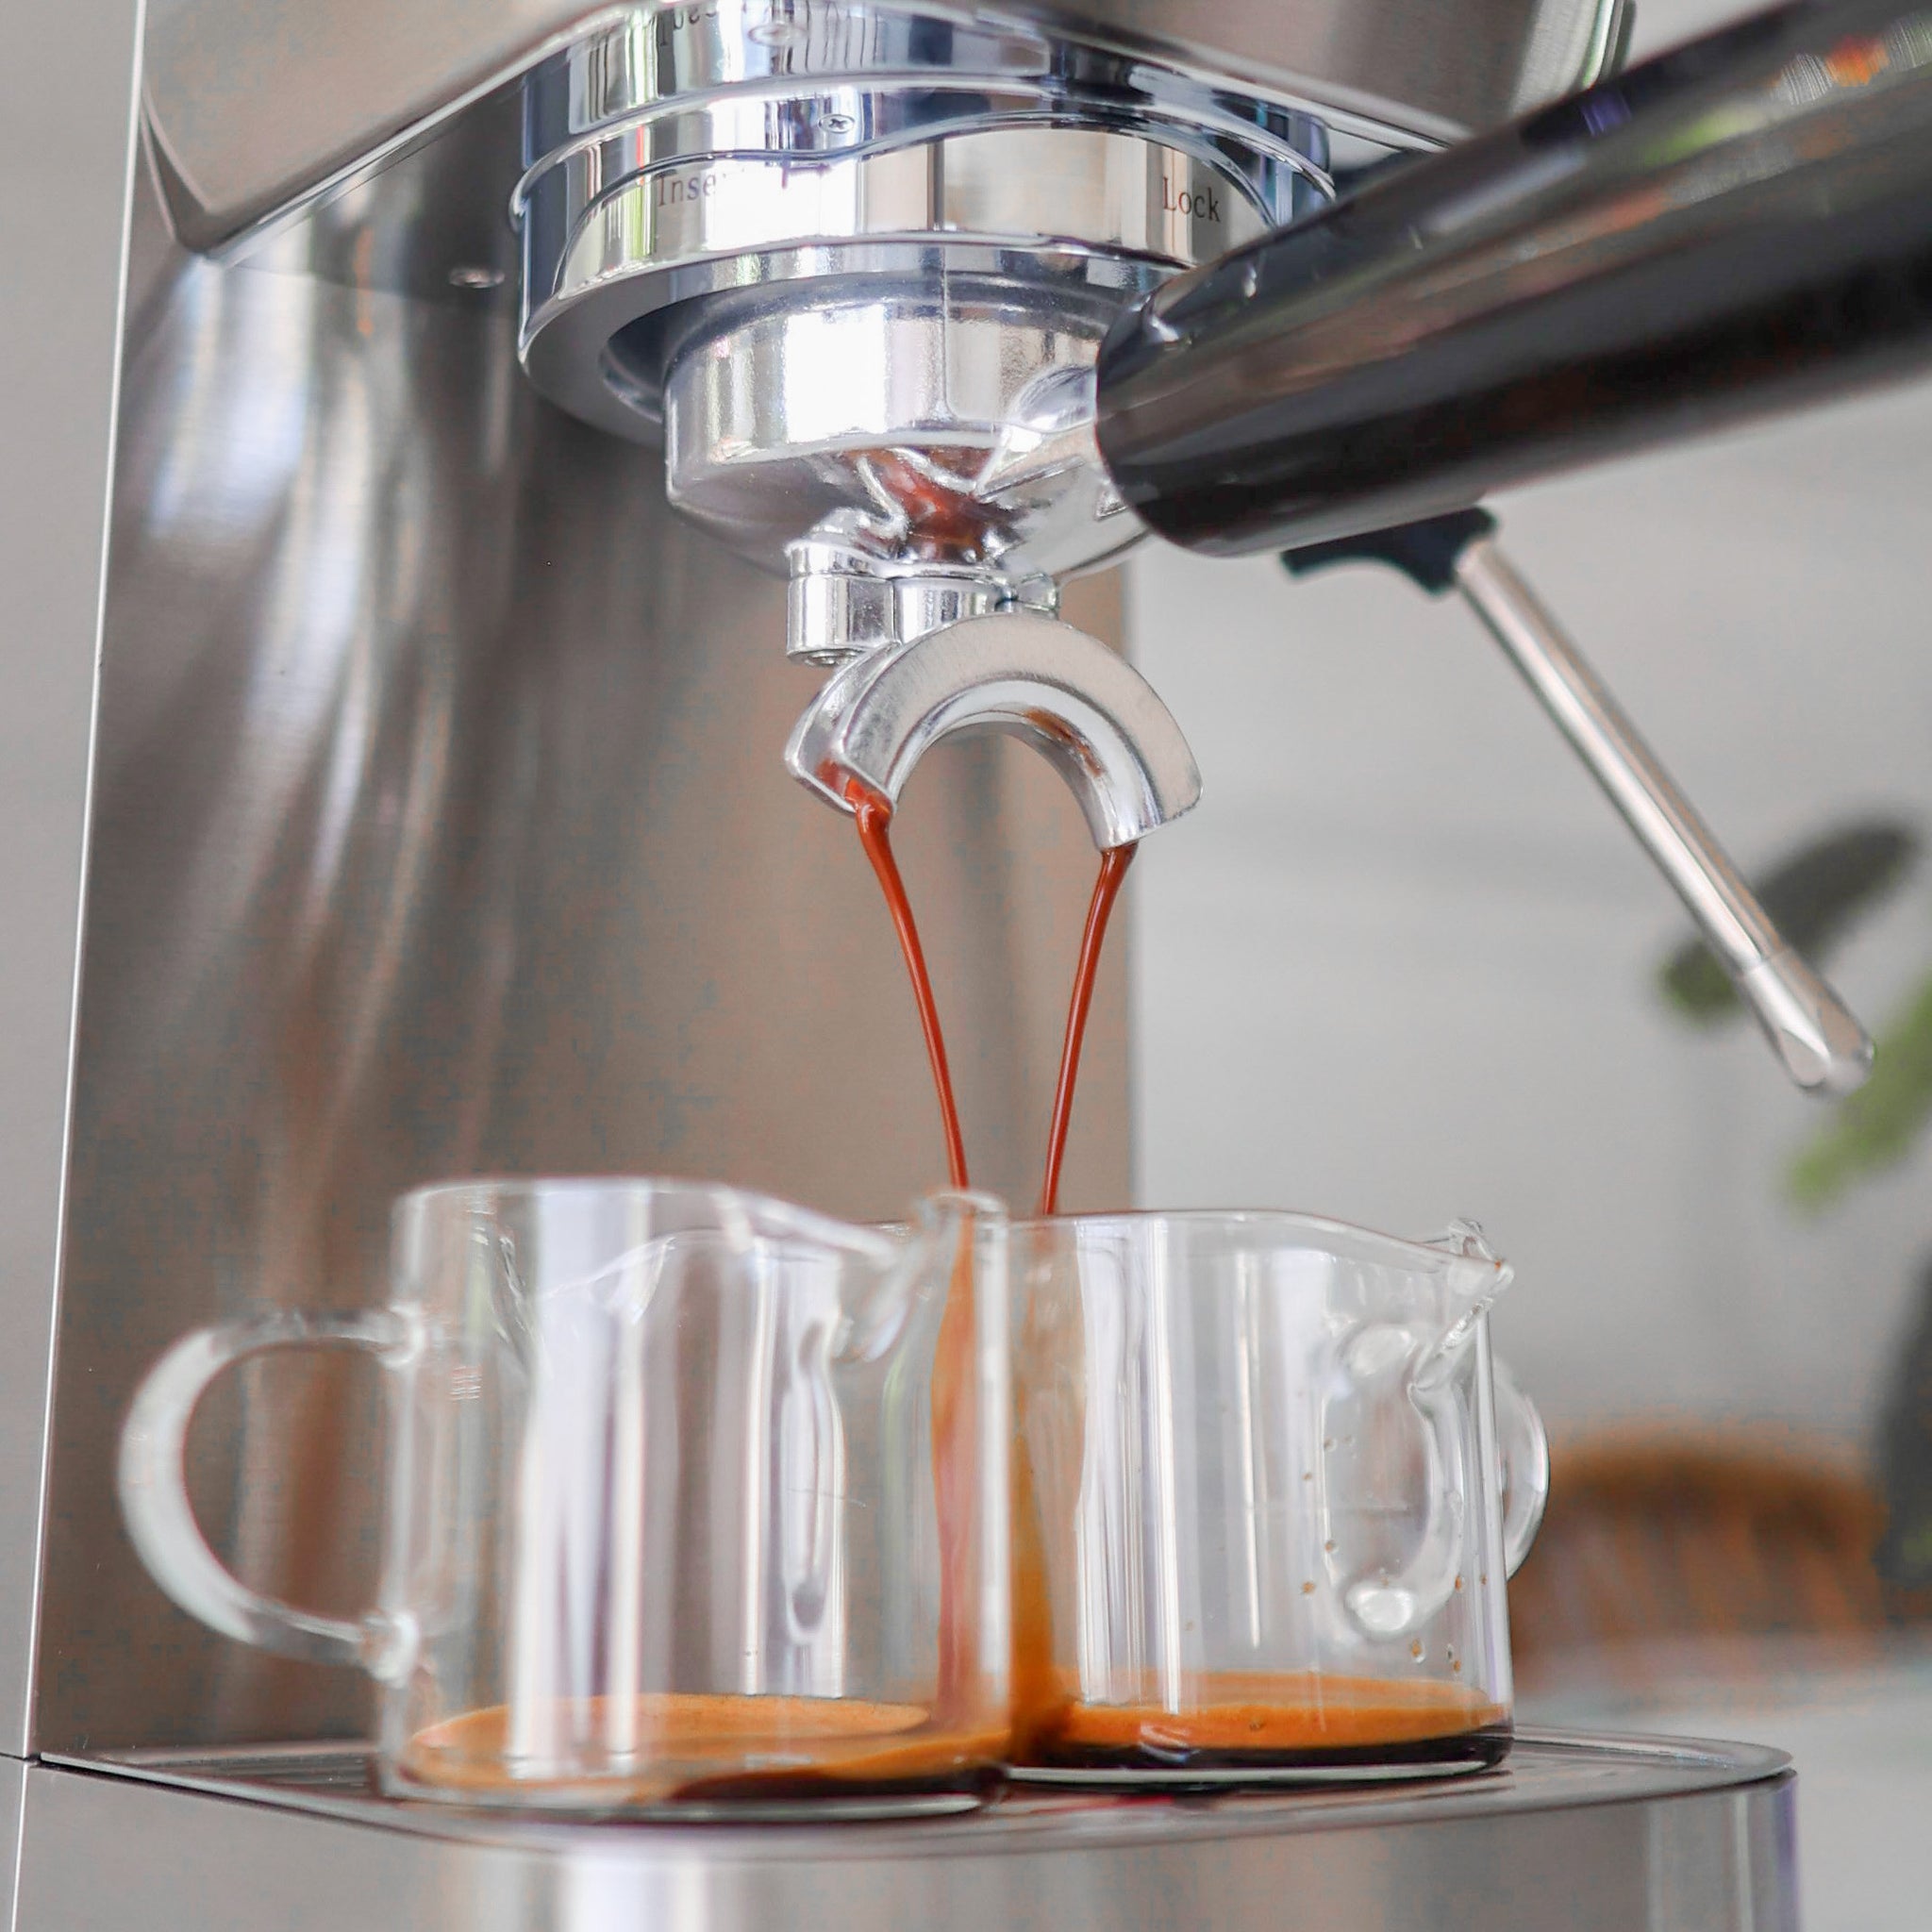 Wirsh 20 Bar Espresso Machine with Plastic Free Portafitler and Steame